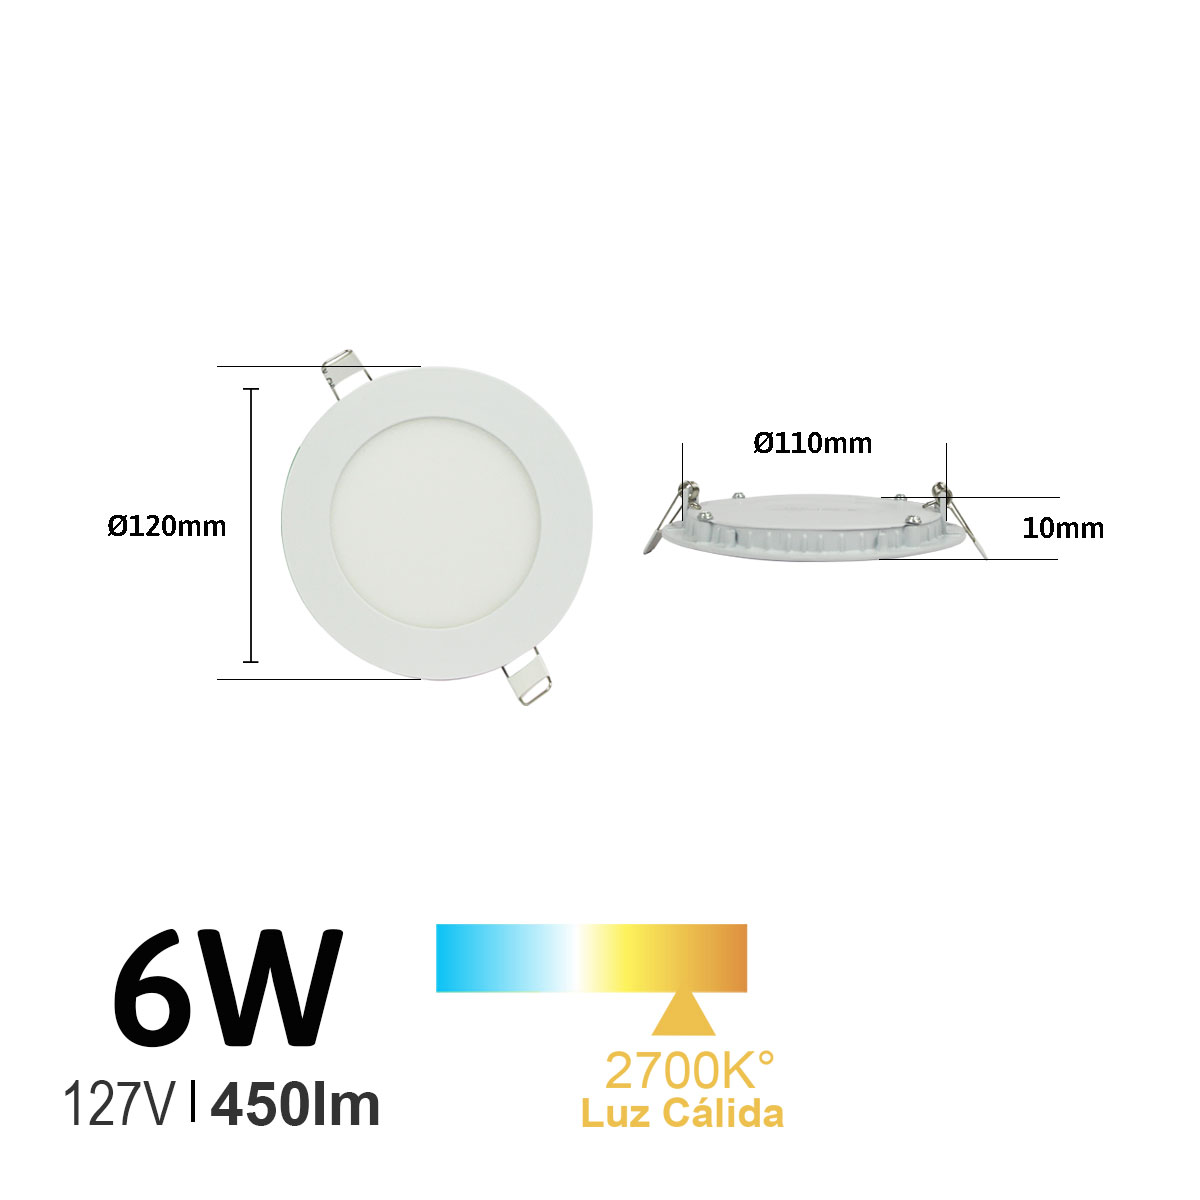 Lentes de Seguridad - Iluminacion LED JWJ Comercial México